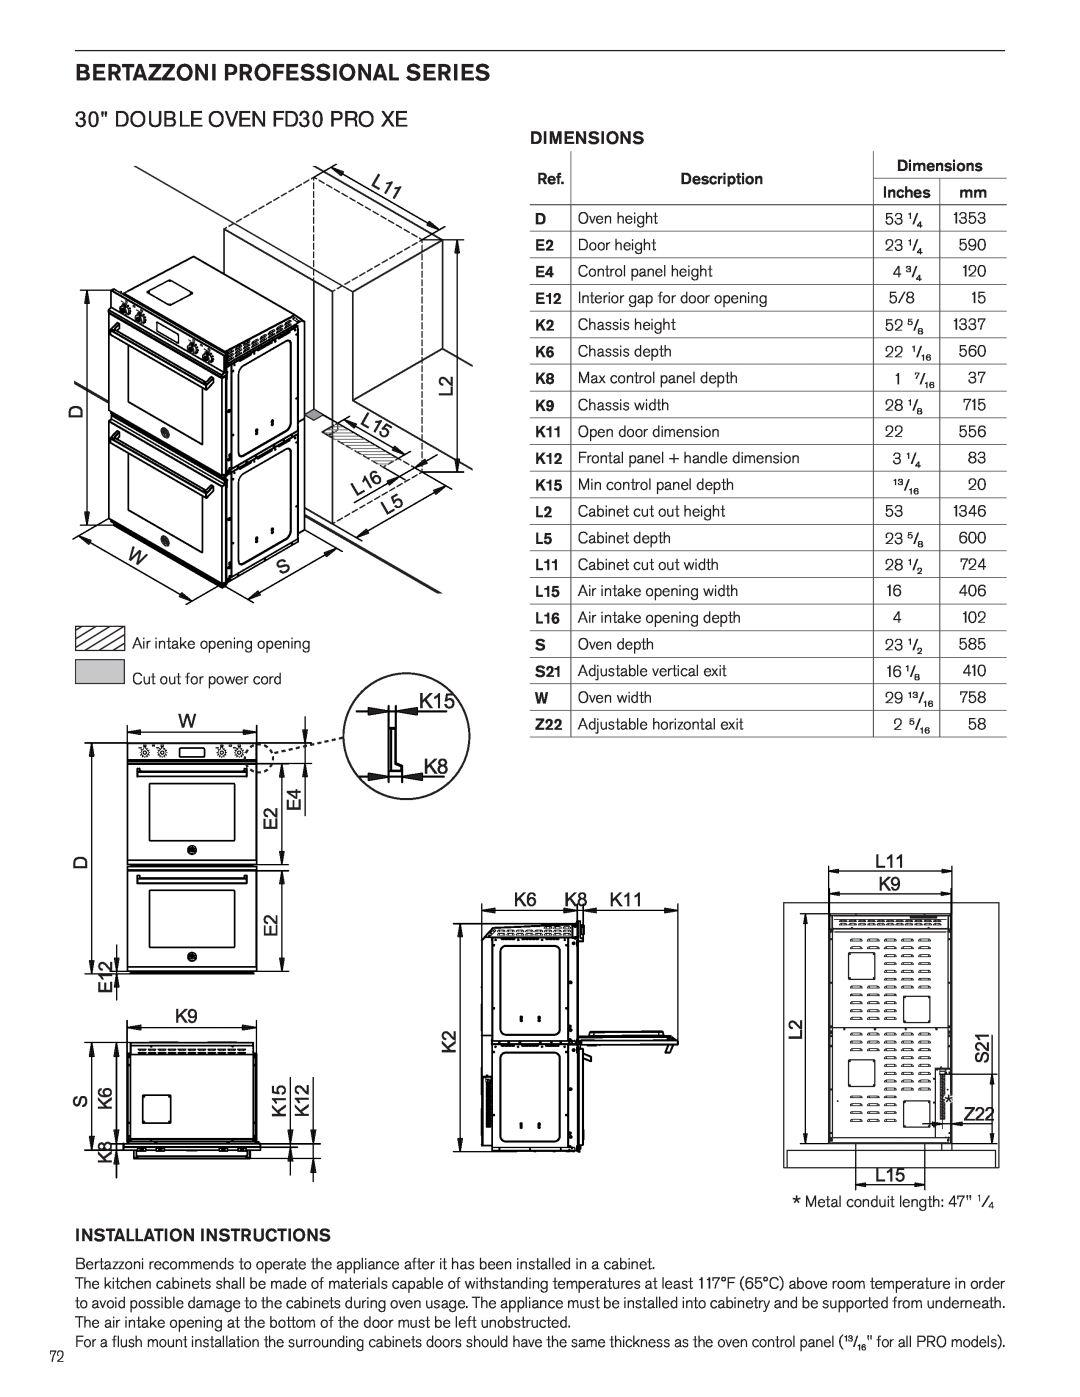 Bertazzoni FD30 PRO XE manual Bertazzoni Professional Series, Dimensions, Installation Instructions 